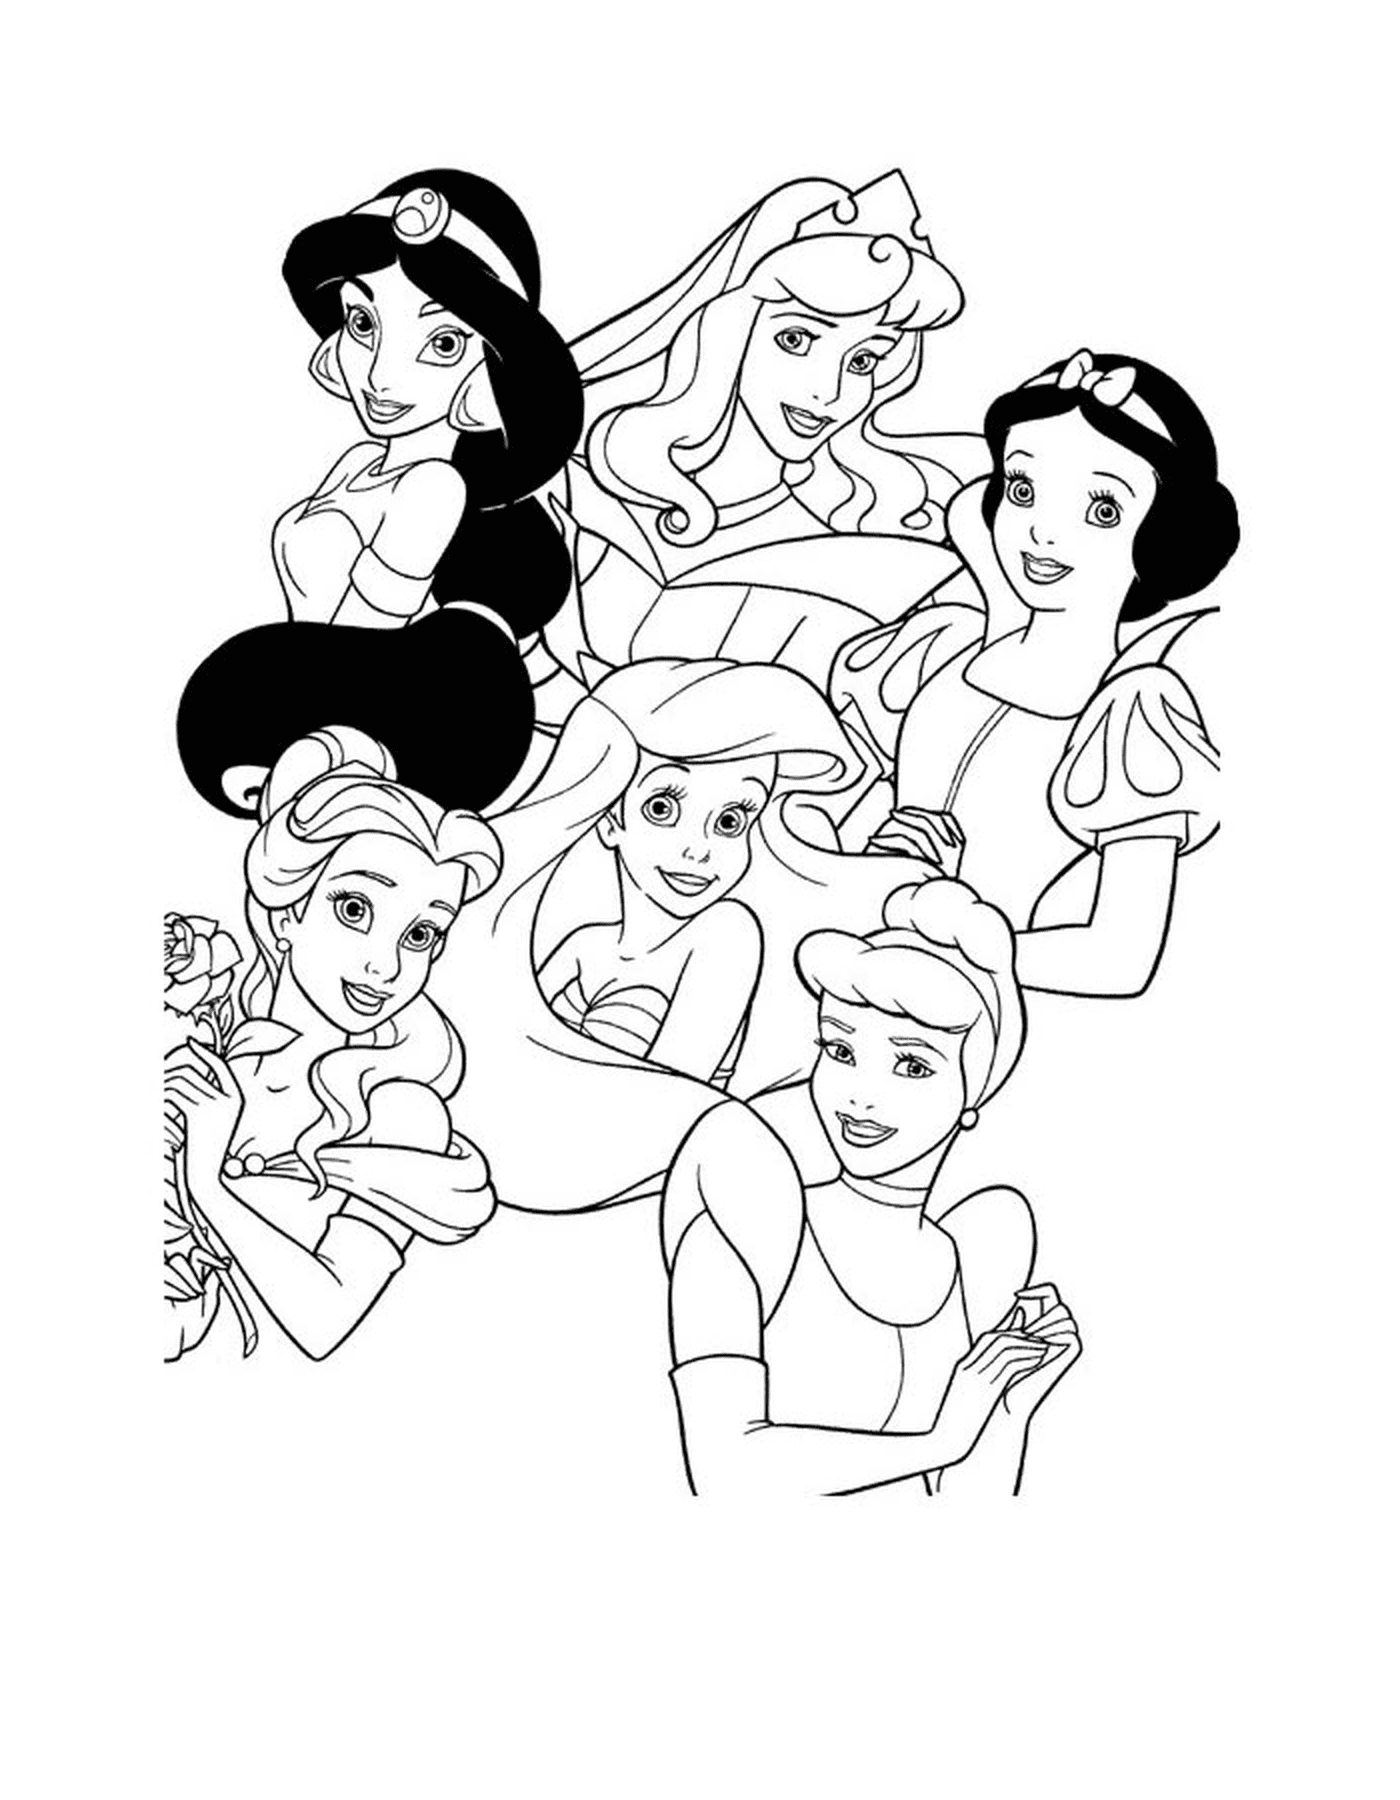  Various Disney Princesses together 